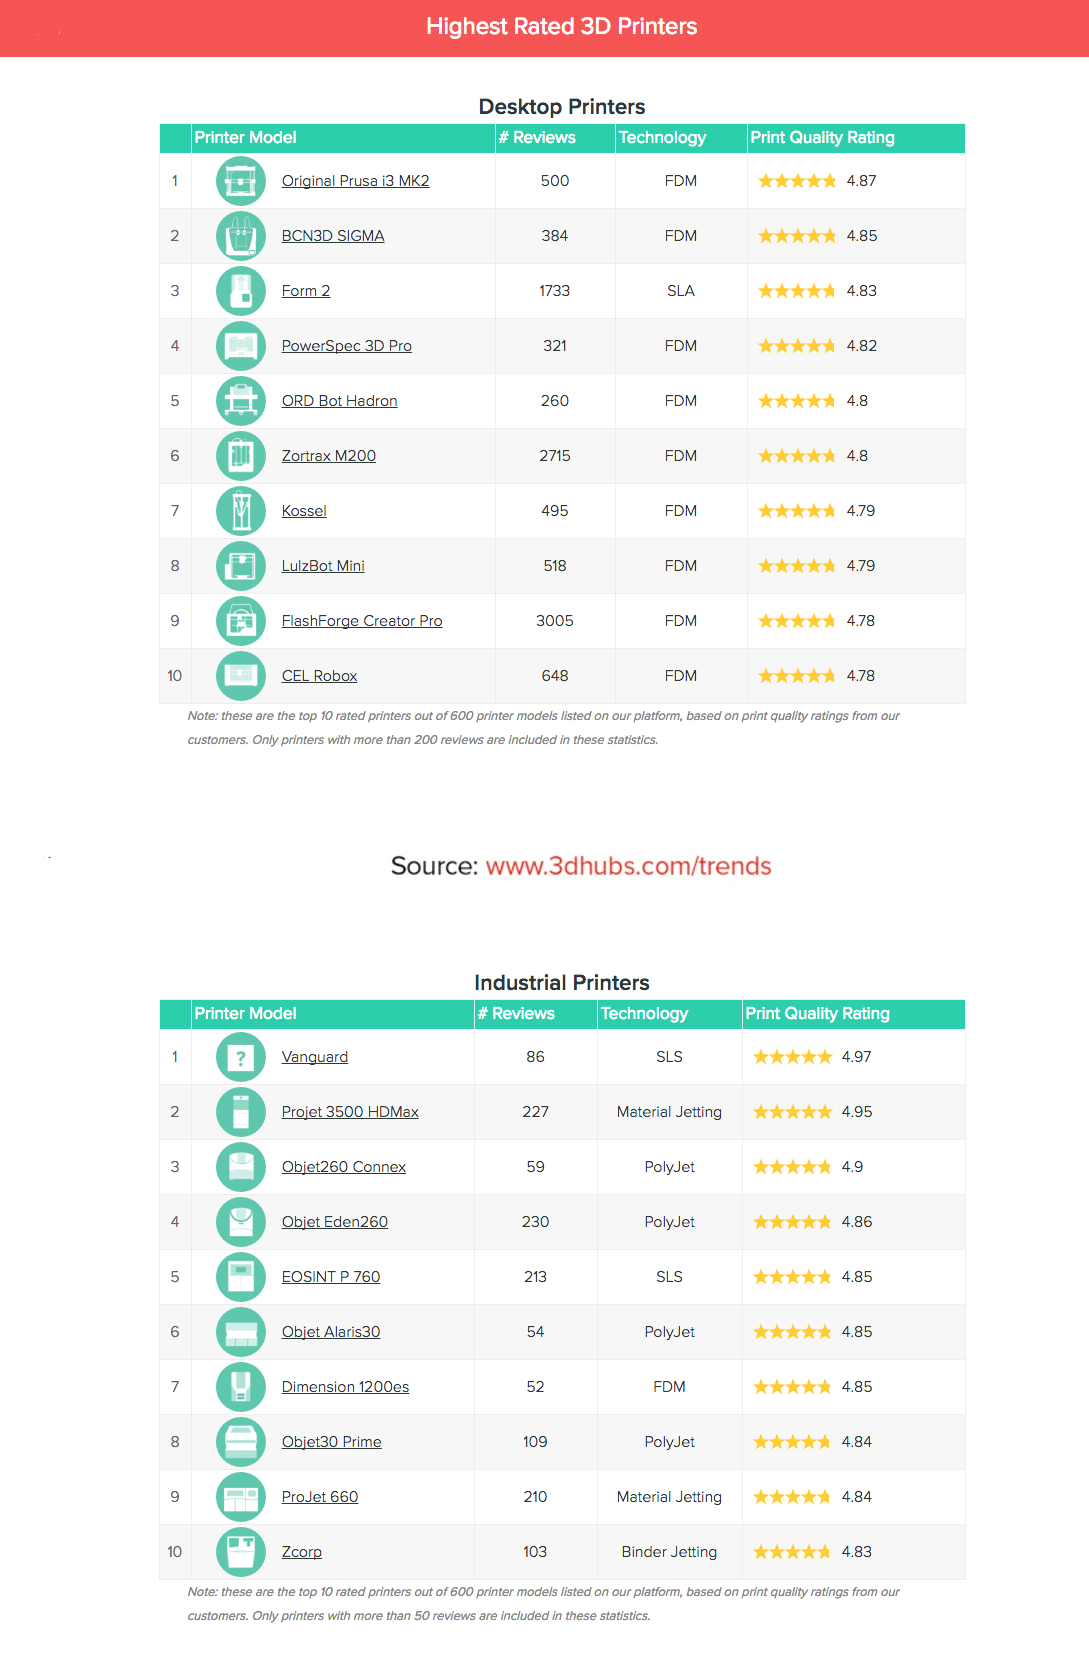 Top 10 rankings for desktop and industrial 3D printers.